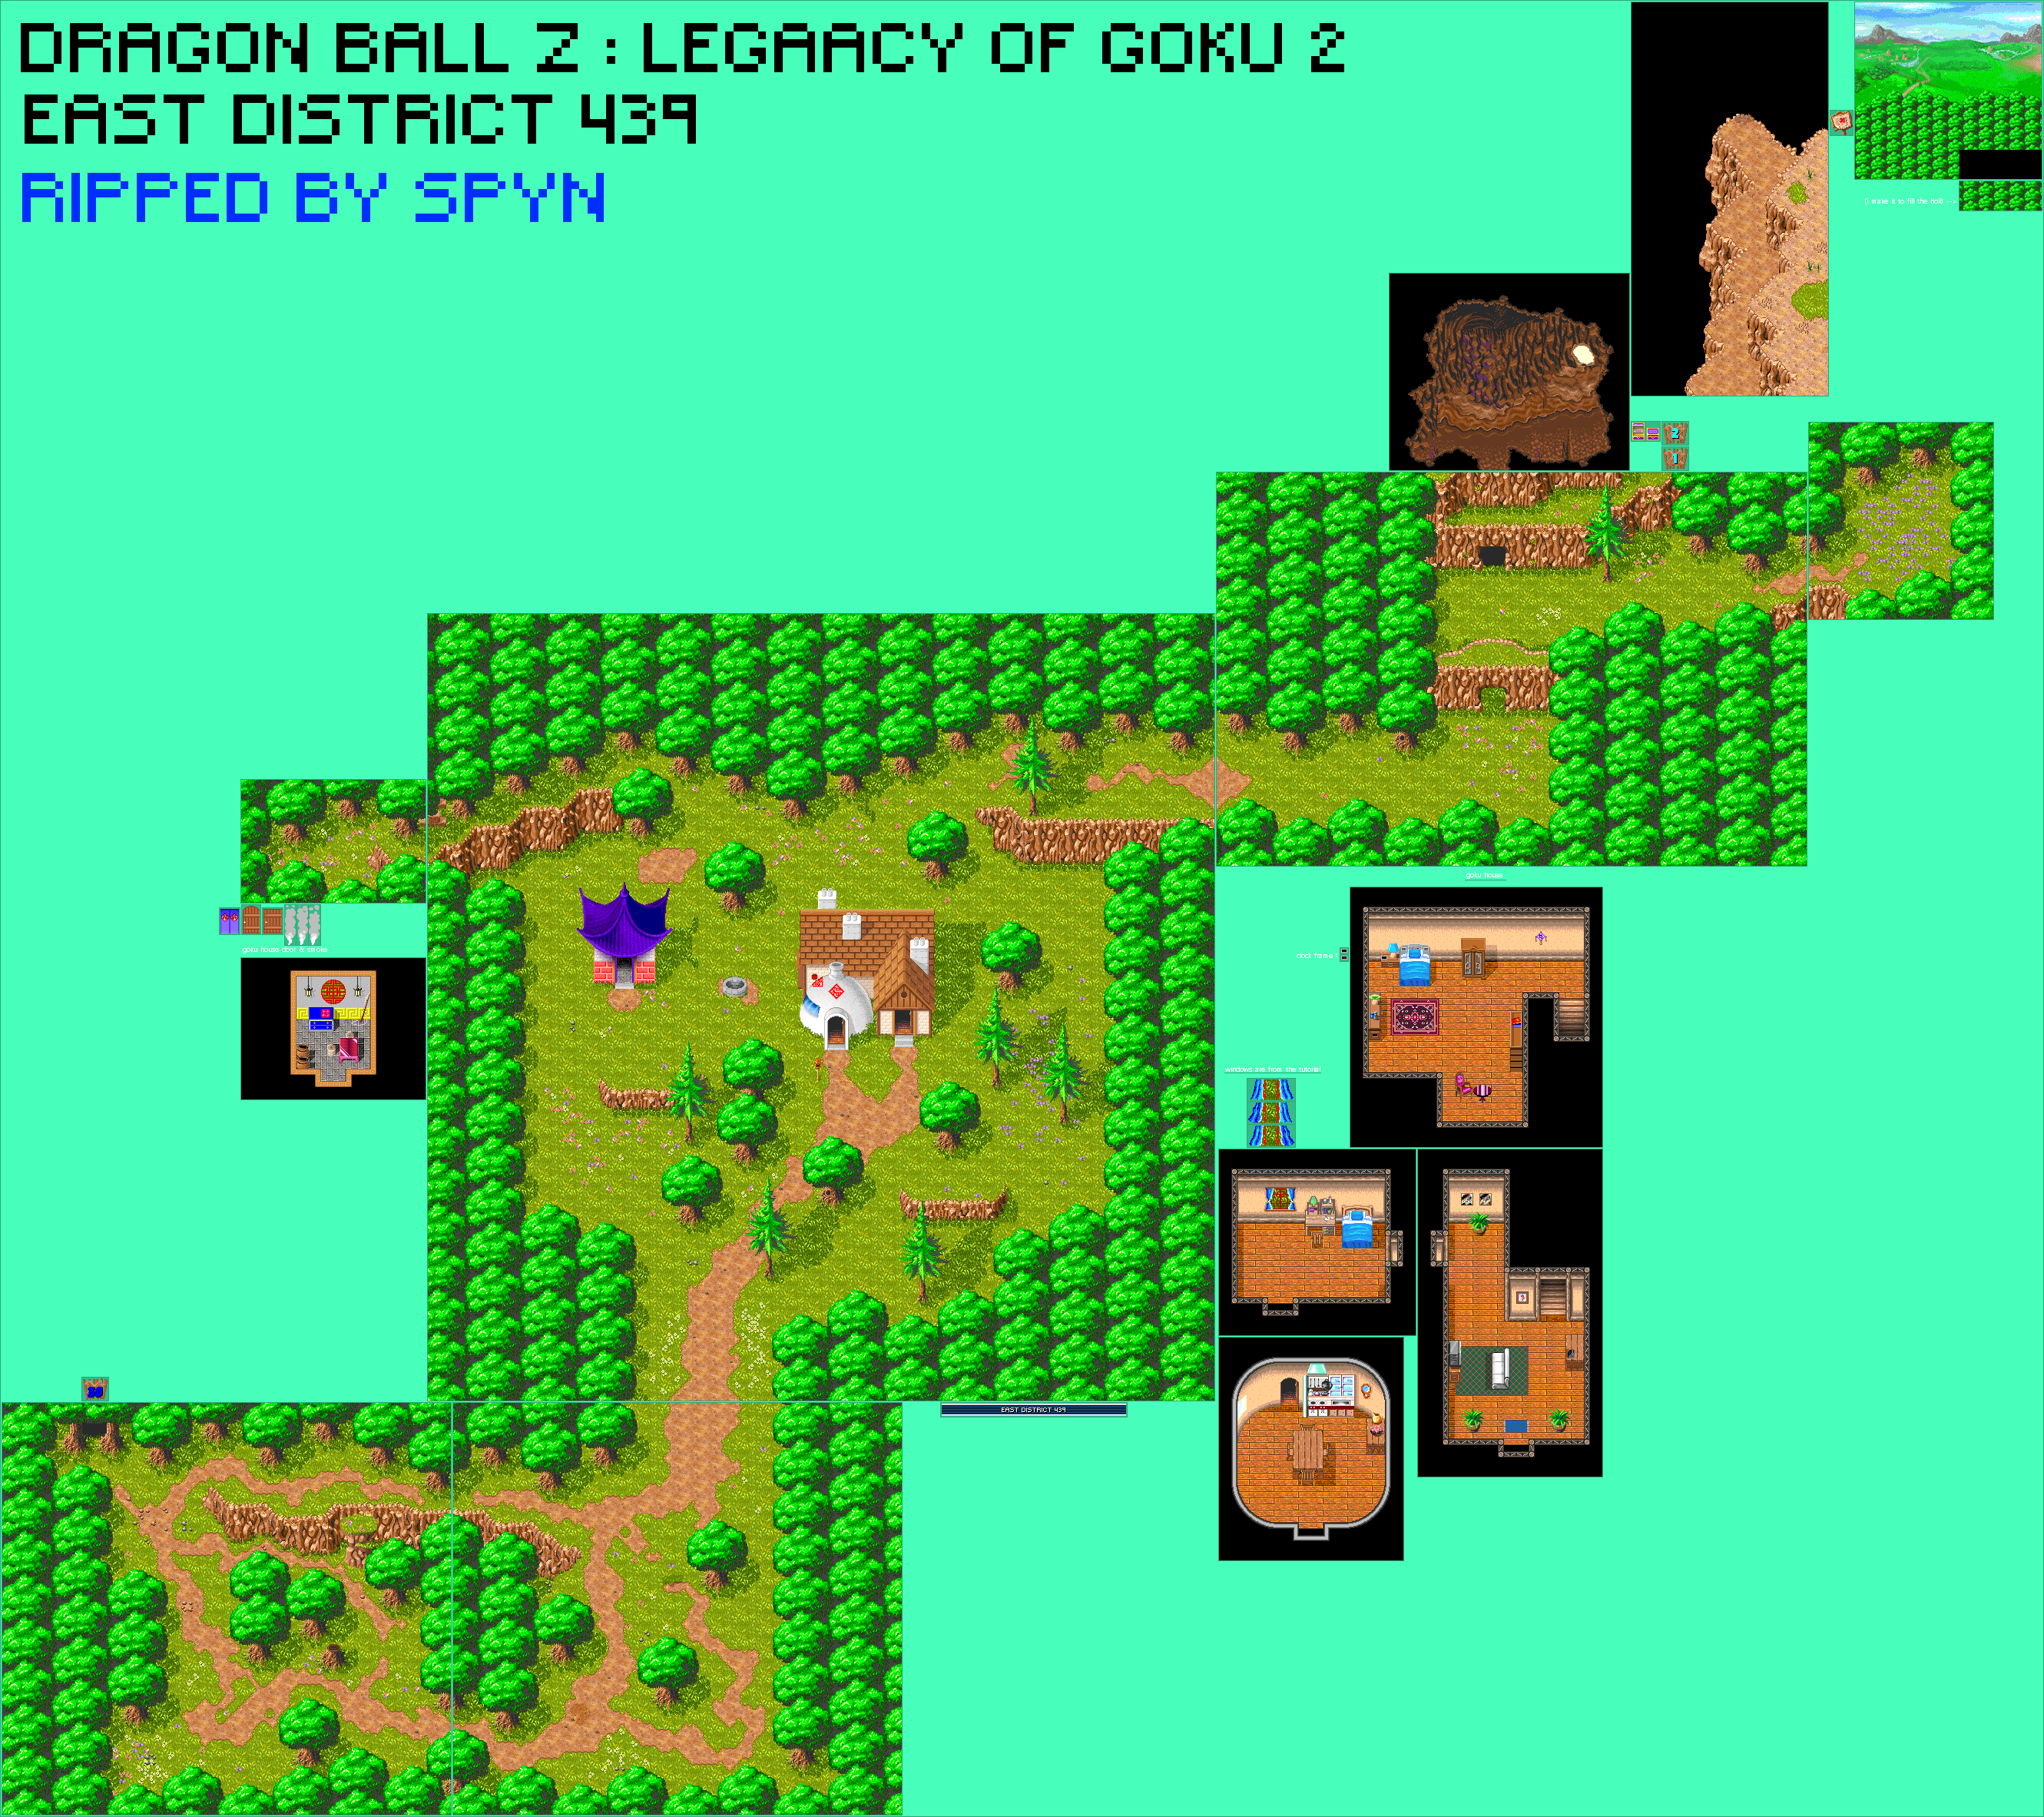 Dragon Ball Z: The Legacy of Goku II - East District 439